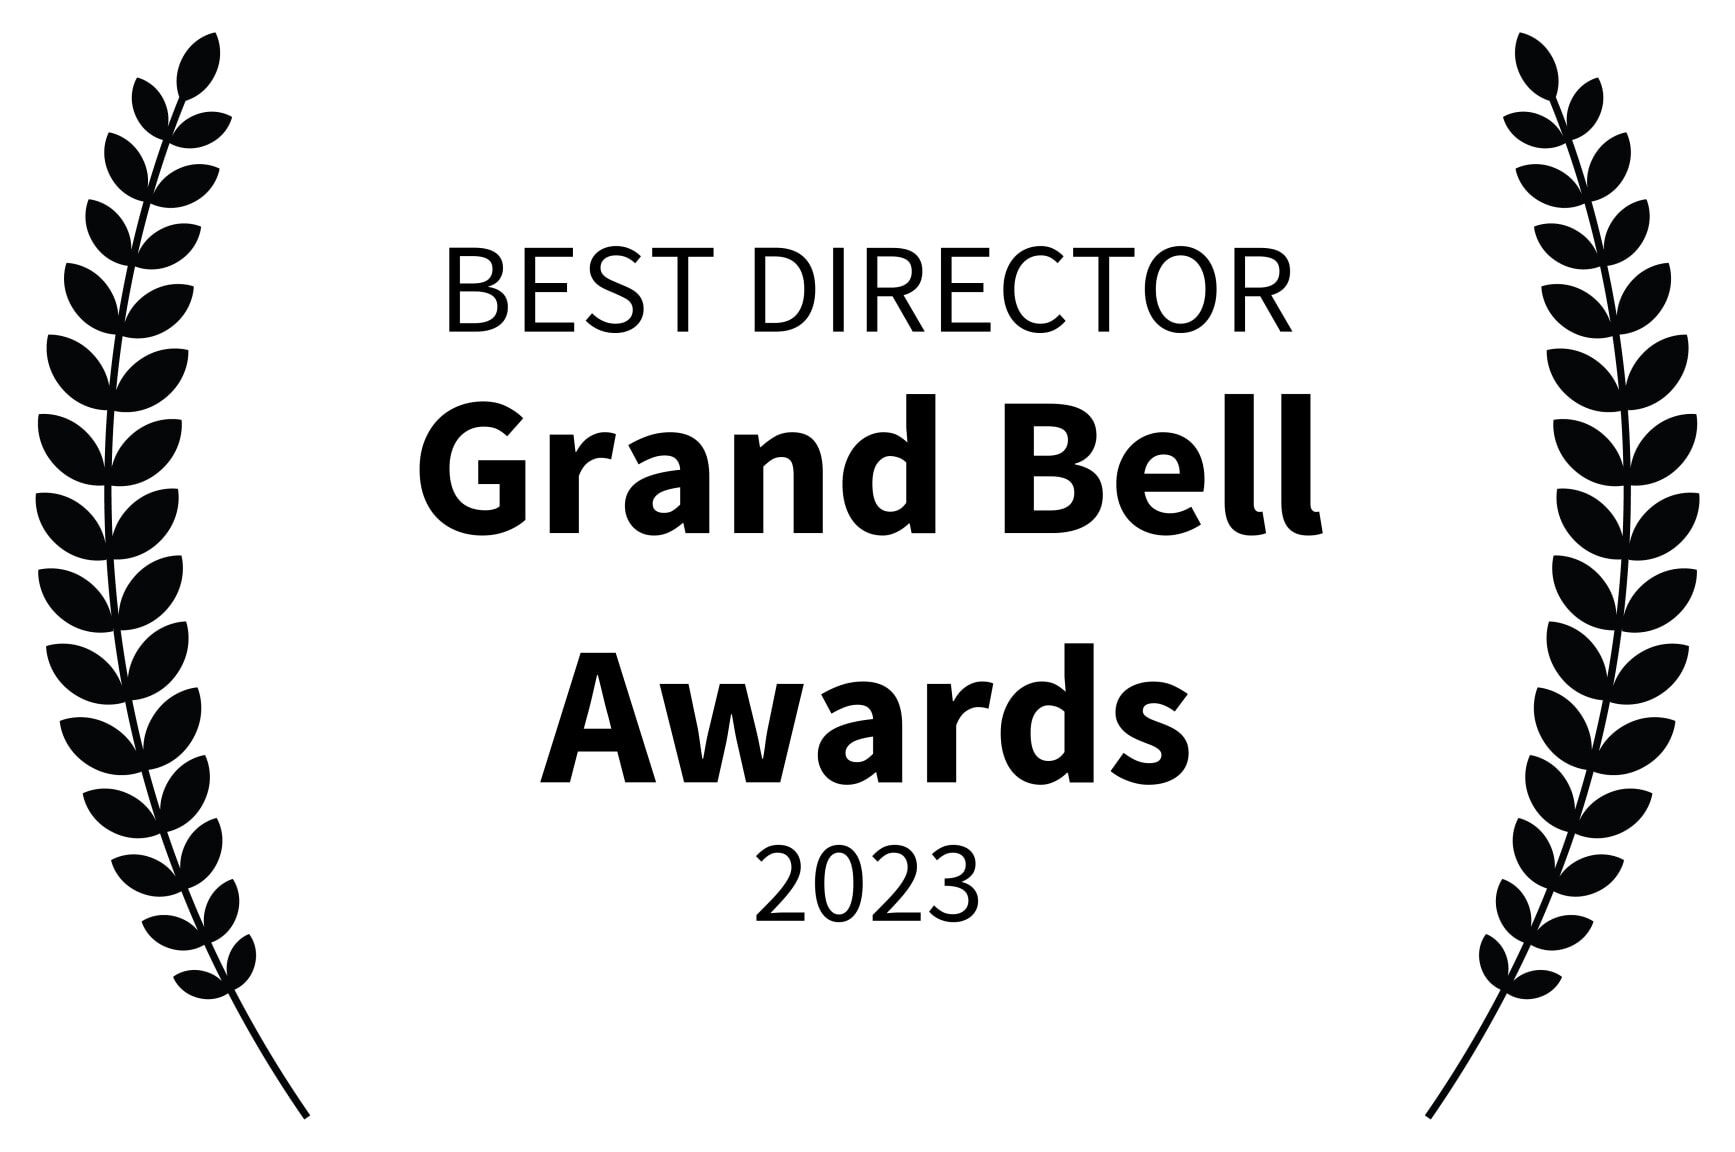 BEST DIRECTOR - Grand Bell Awards - 2023